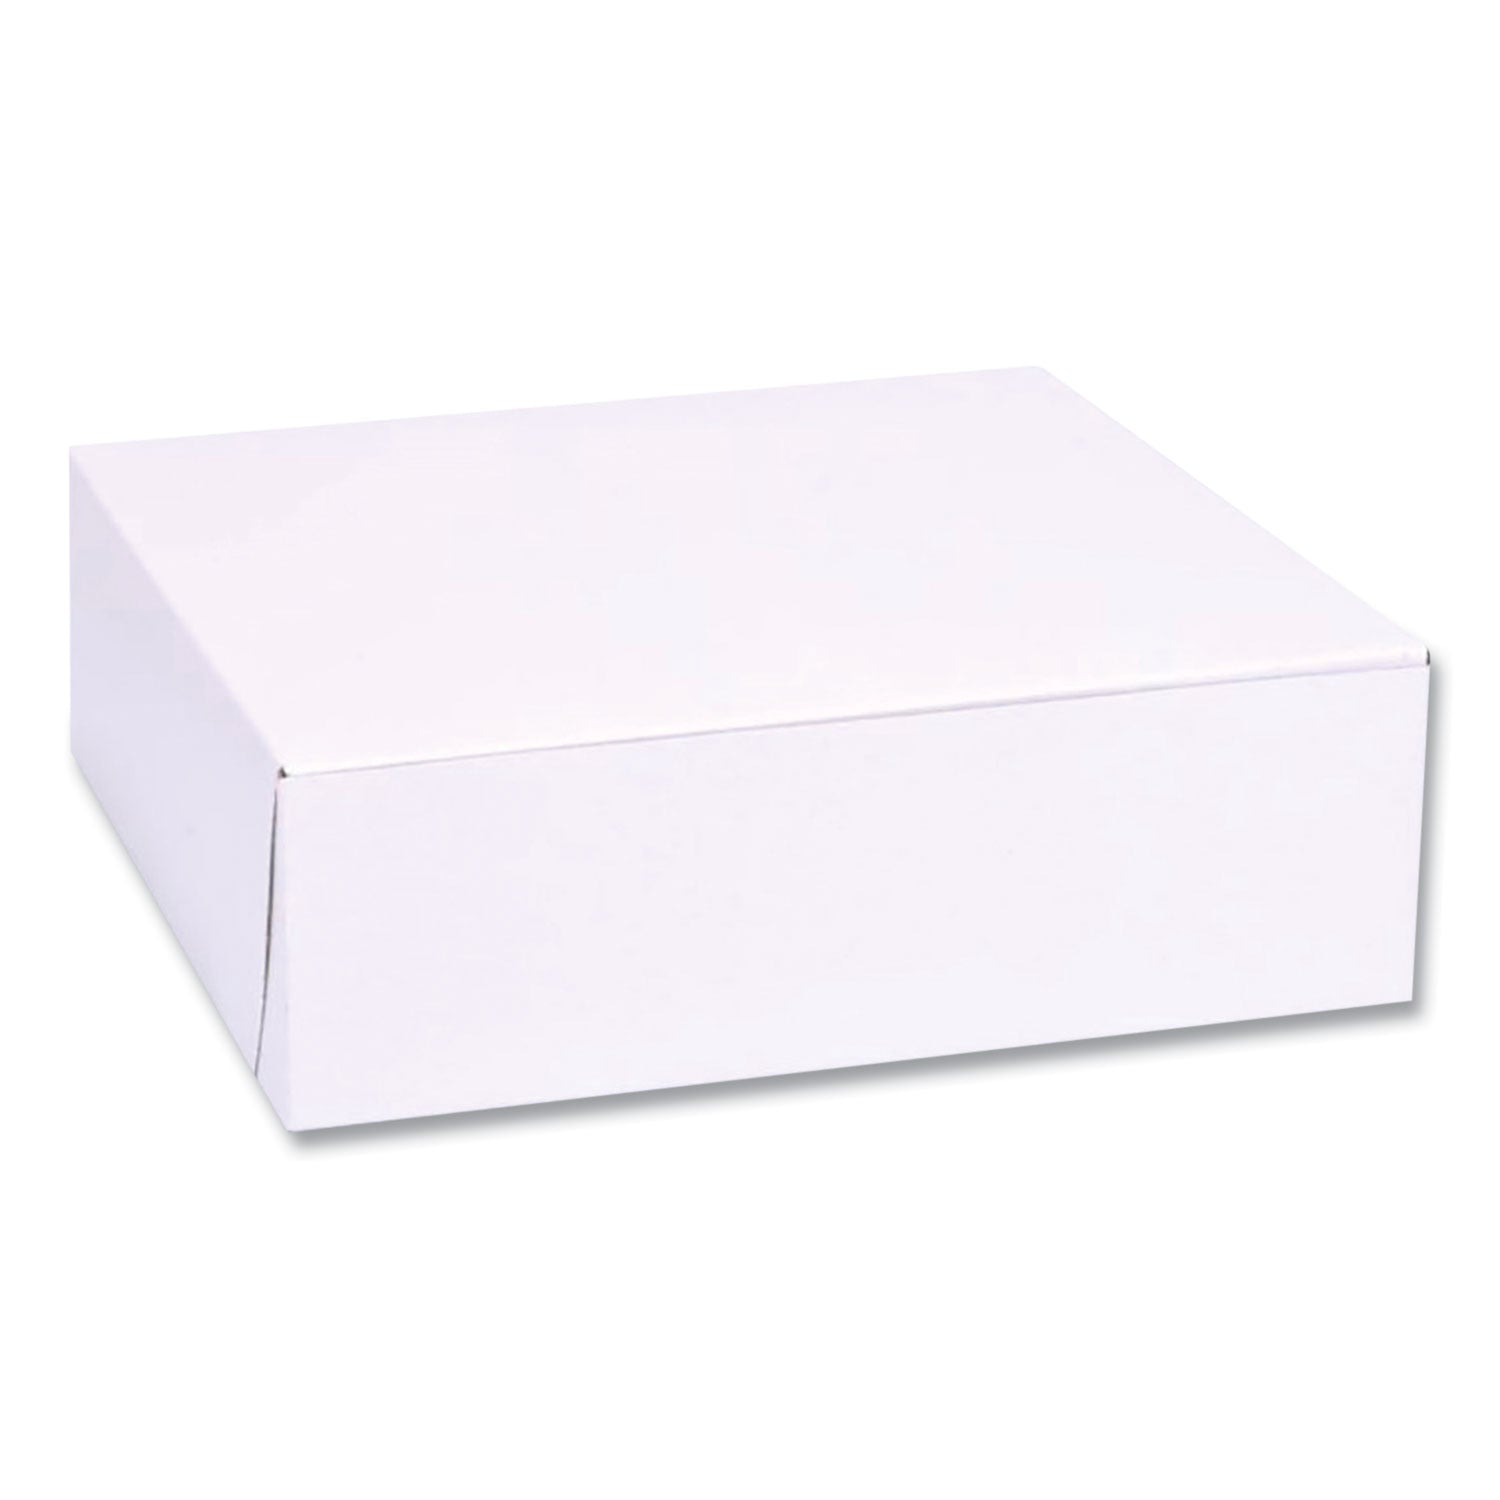 white-one-piece-non-window-bakery-boxes-standard-8-x-25-x-8-white-paper-250-bundle_sch1533 - 1